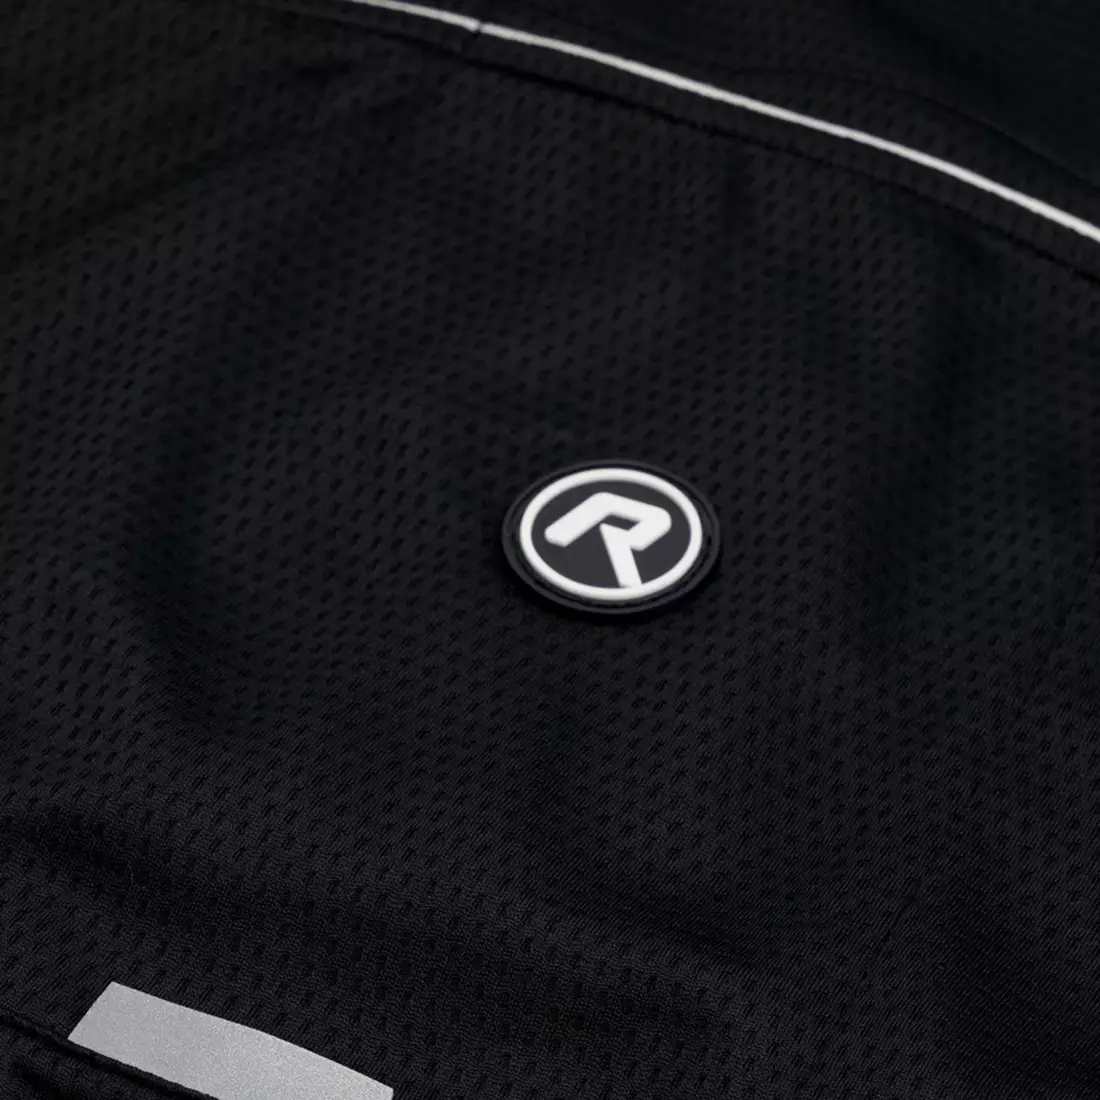 Rogelli Men's cycling jersey, long sleeves EXPLORE, black, ROG351000